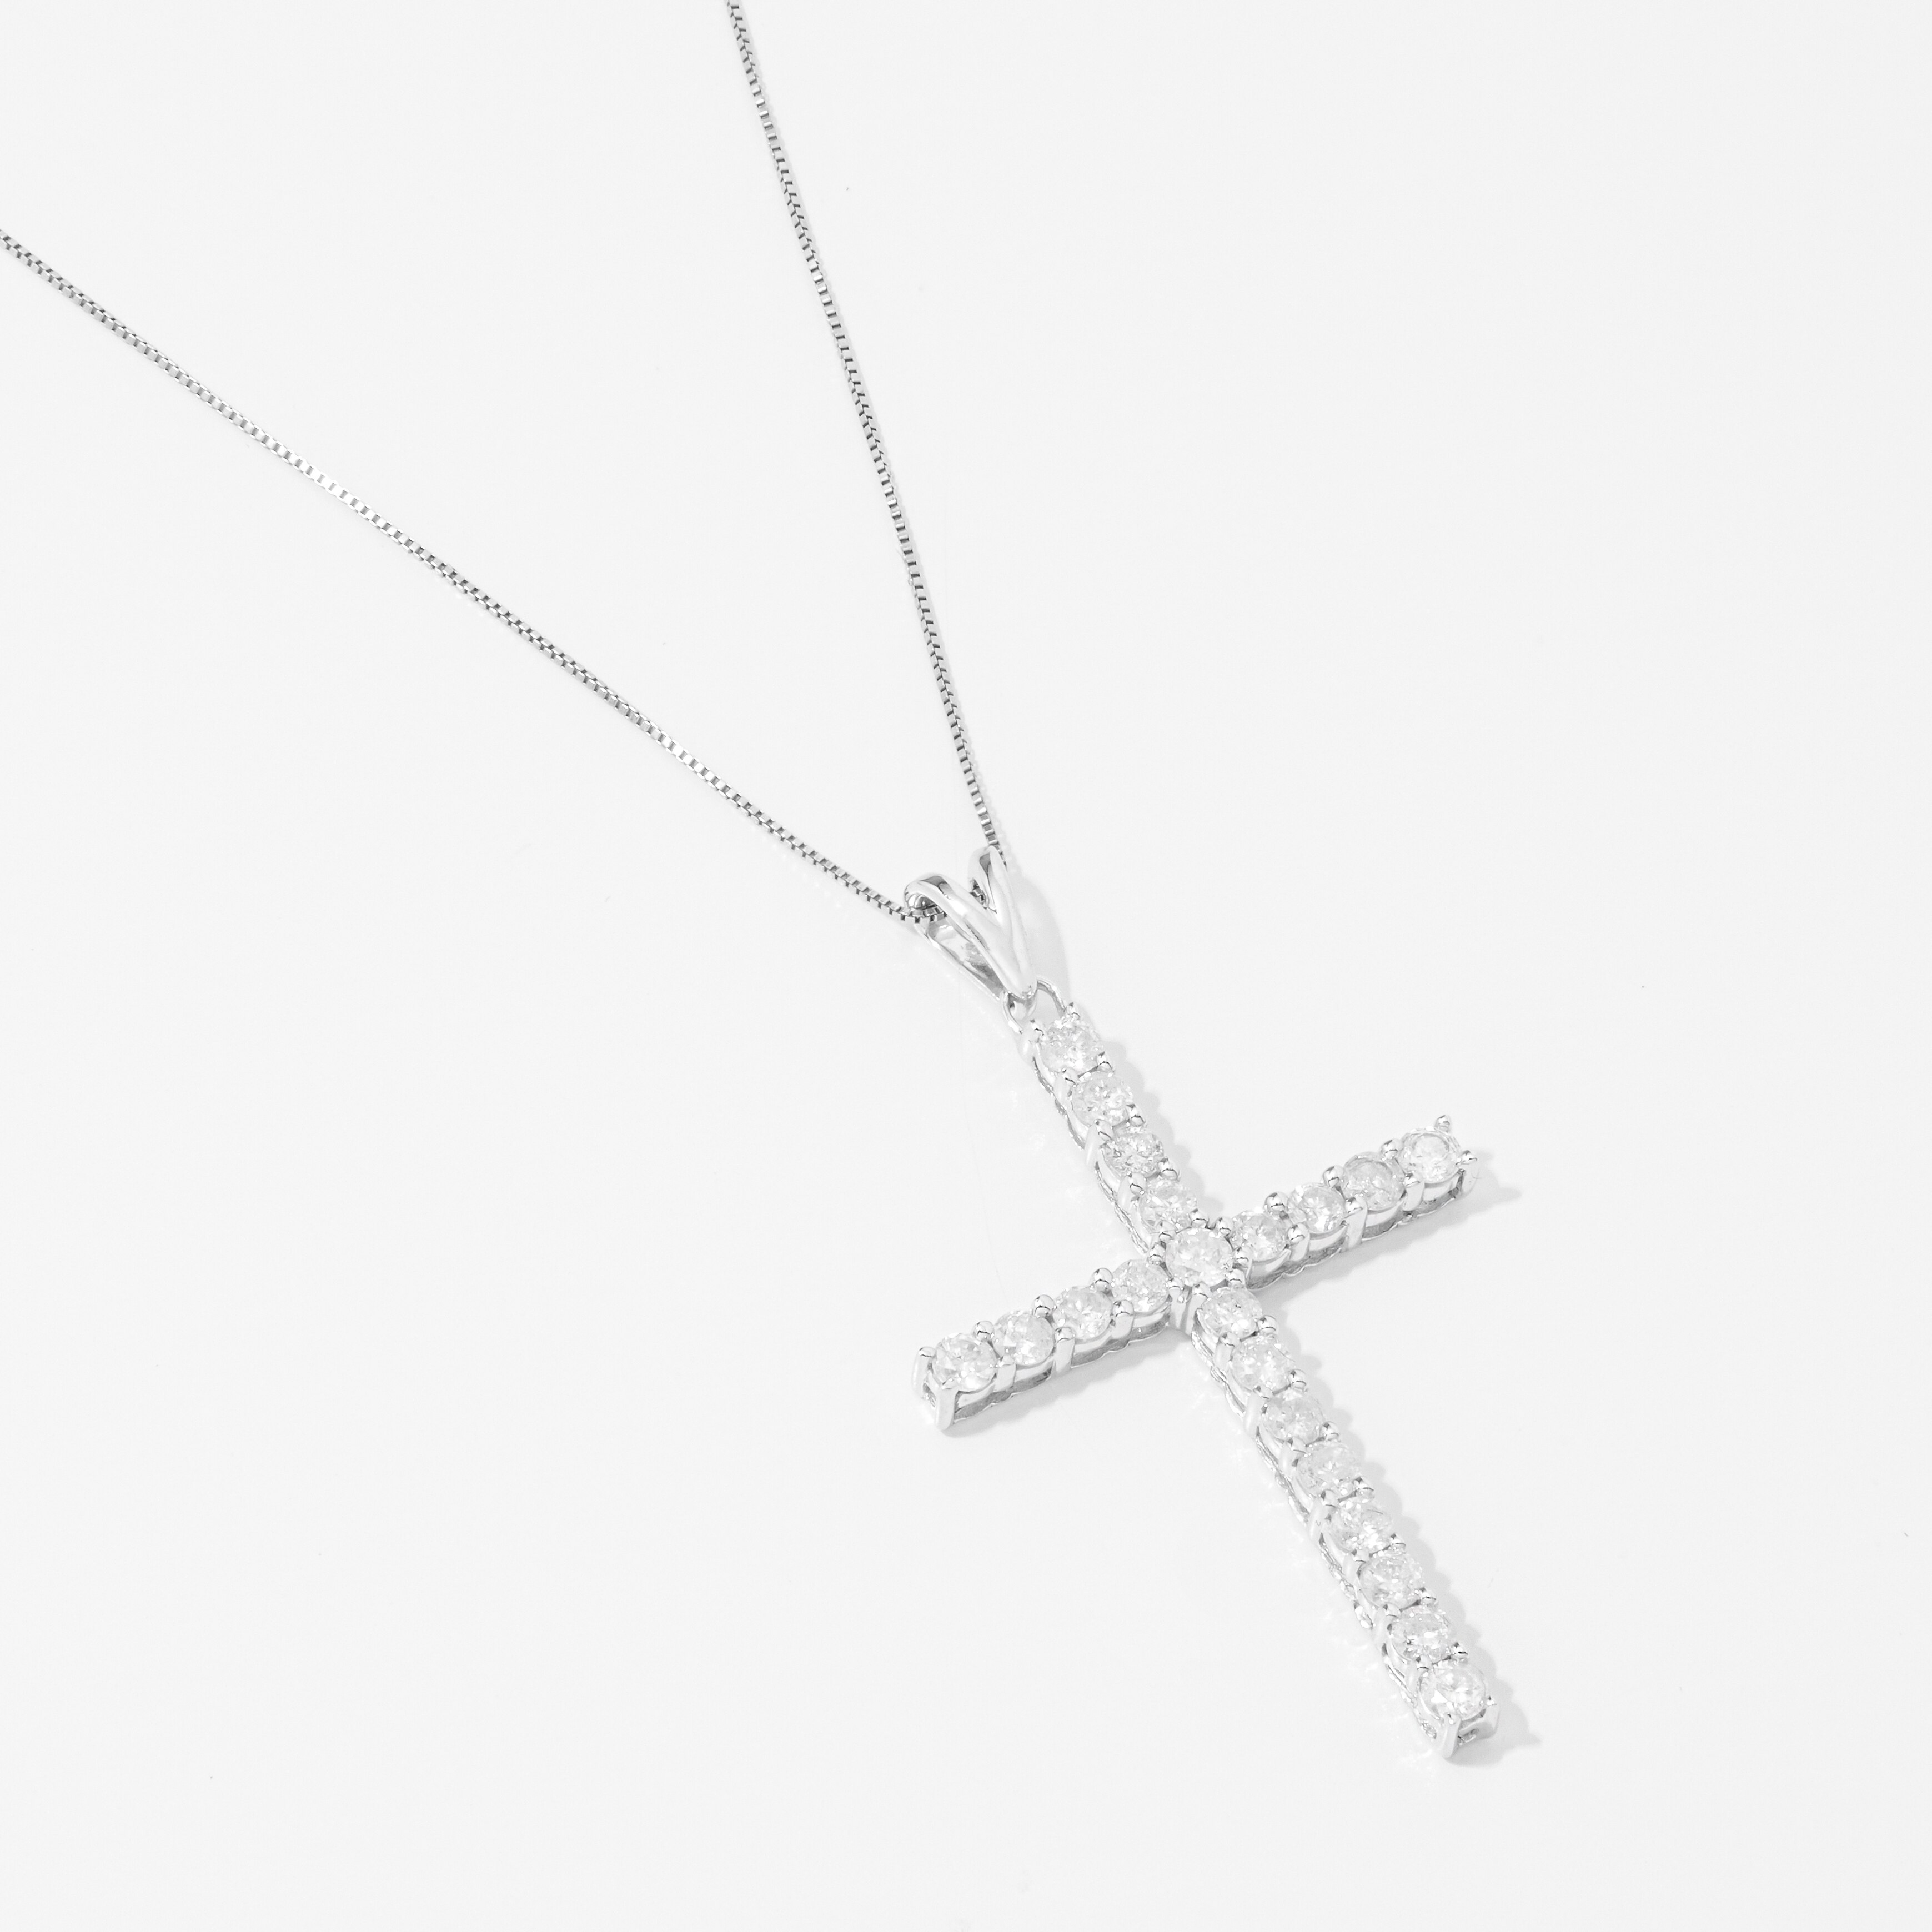 Jewellery - Necklaces & Pendants - Pendant Necklaces - 10K White